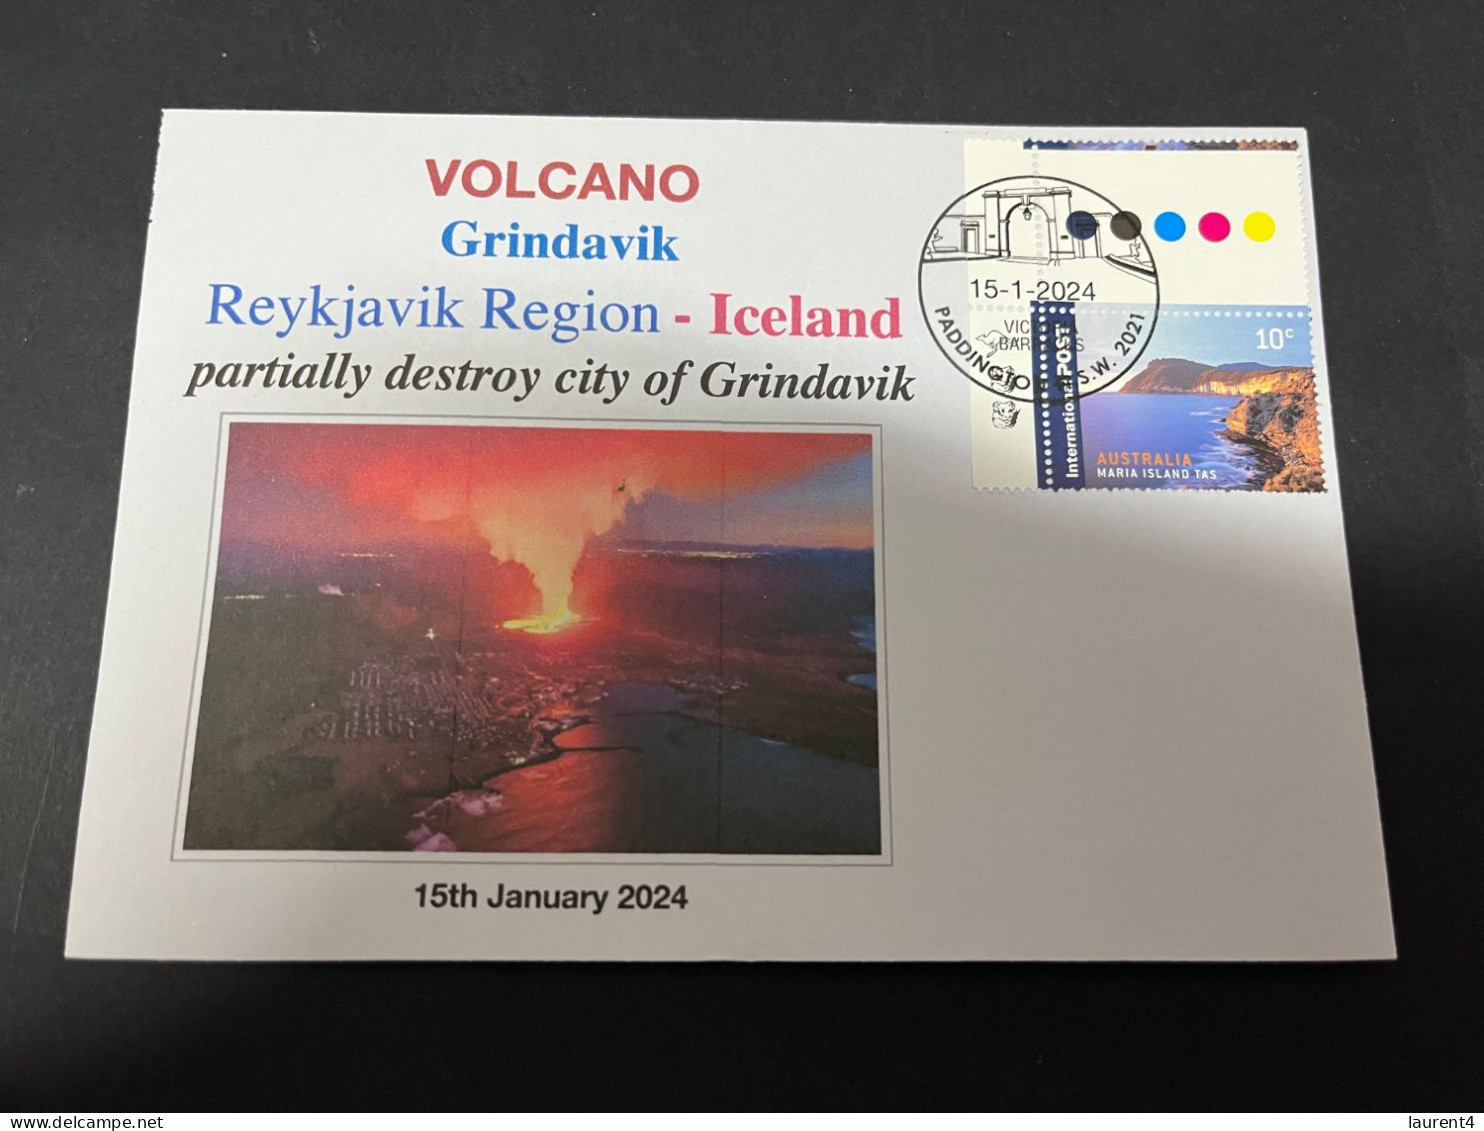 19-1-2024 (1 X 32) Iceland - Volcano Erution Partially Destroyed Fishing City Of Grindavik - Volcanos